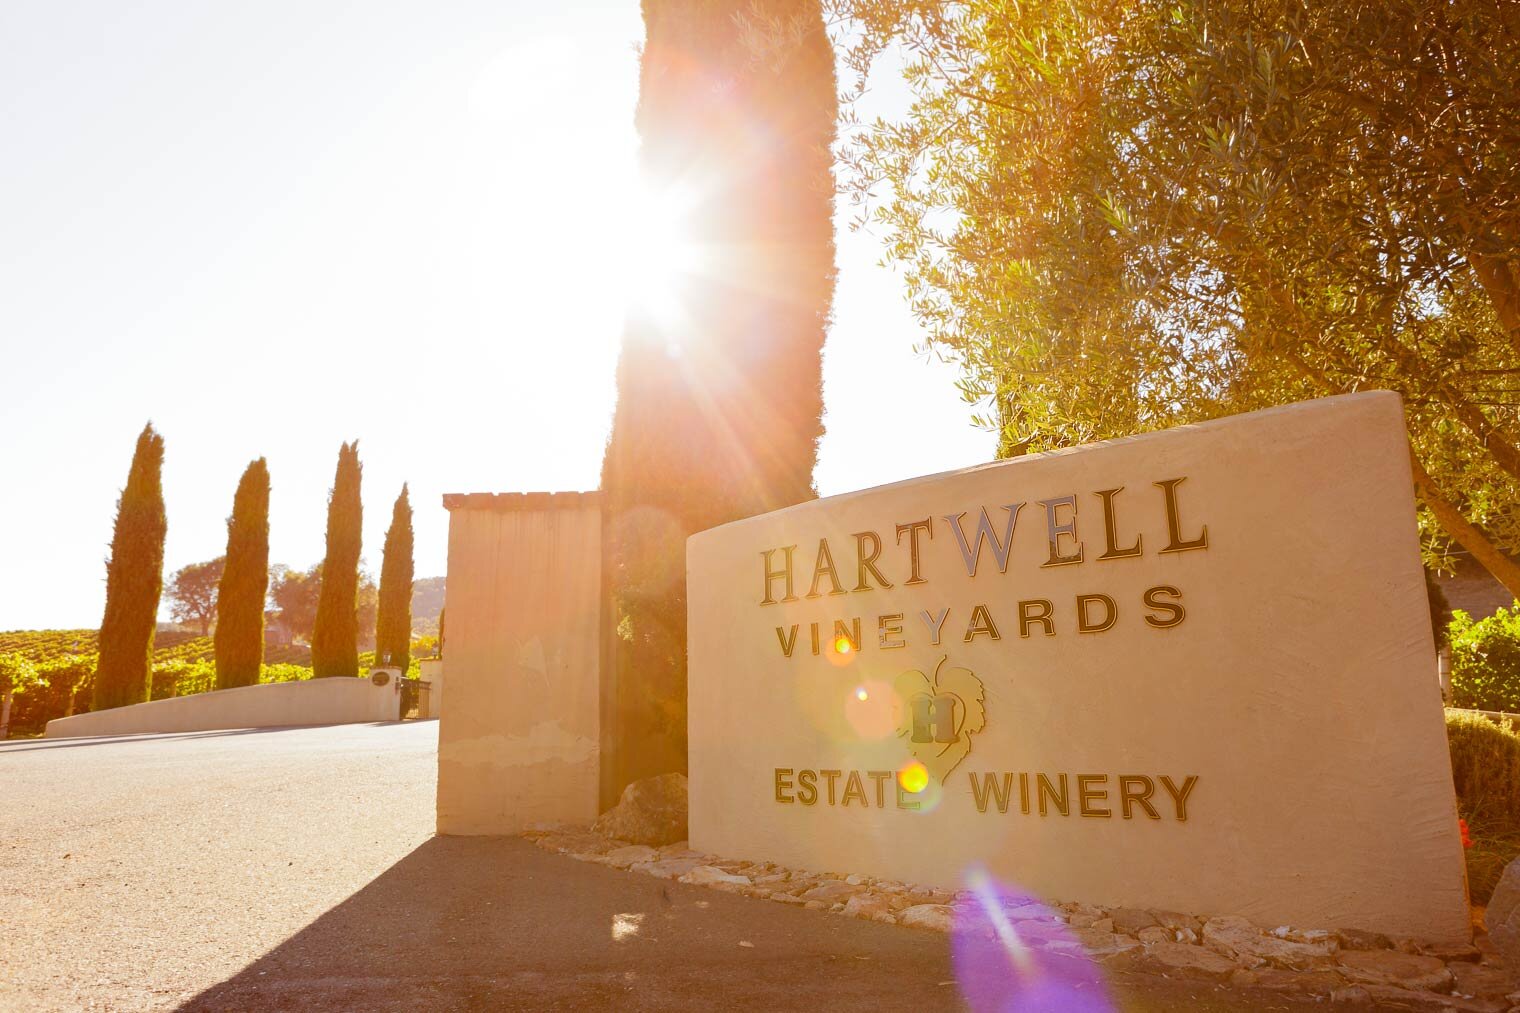 001-hartwell-vineyard-estate-winery-engagement-photography-wedding-photo-journalism